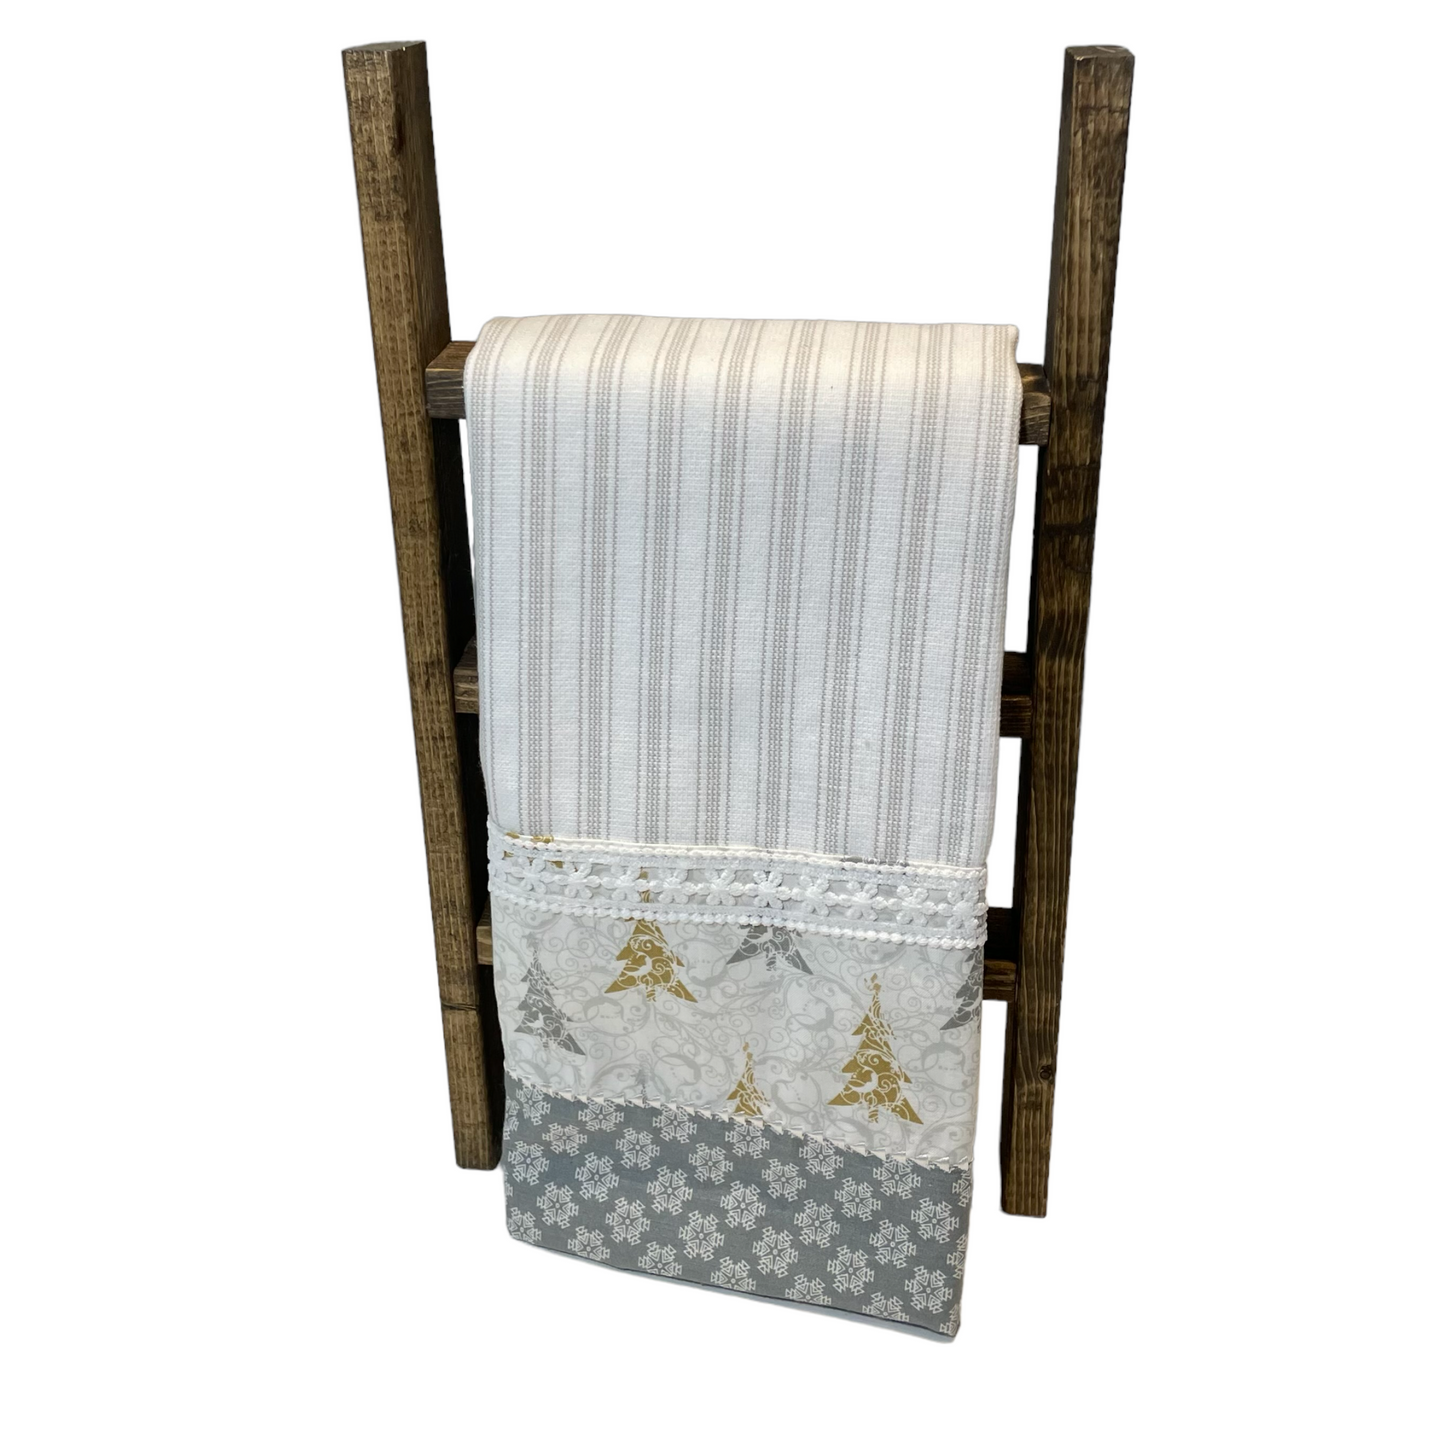 Christmas Tea Towel, White and Grey Decorative Christmas Dish Towel - Home Stitchery Decor